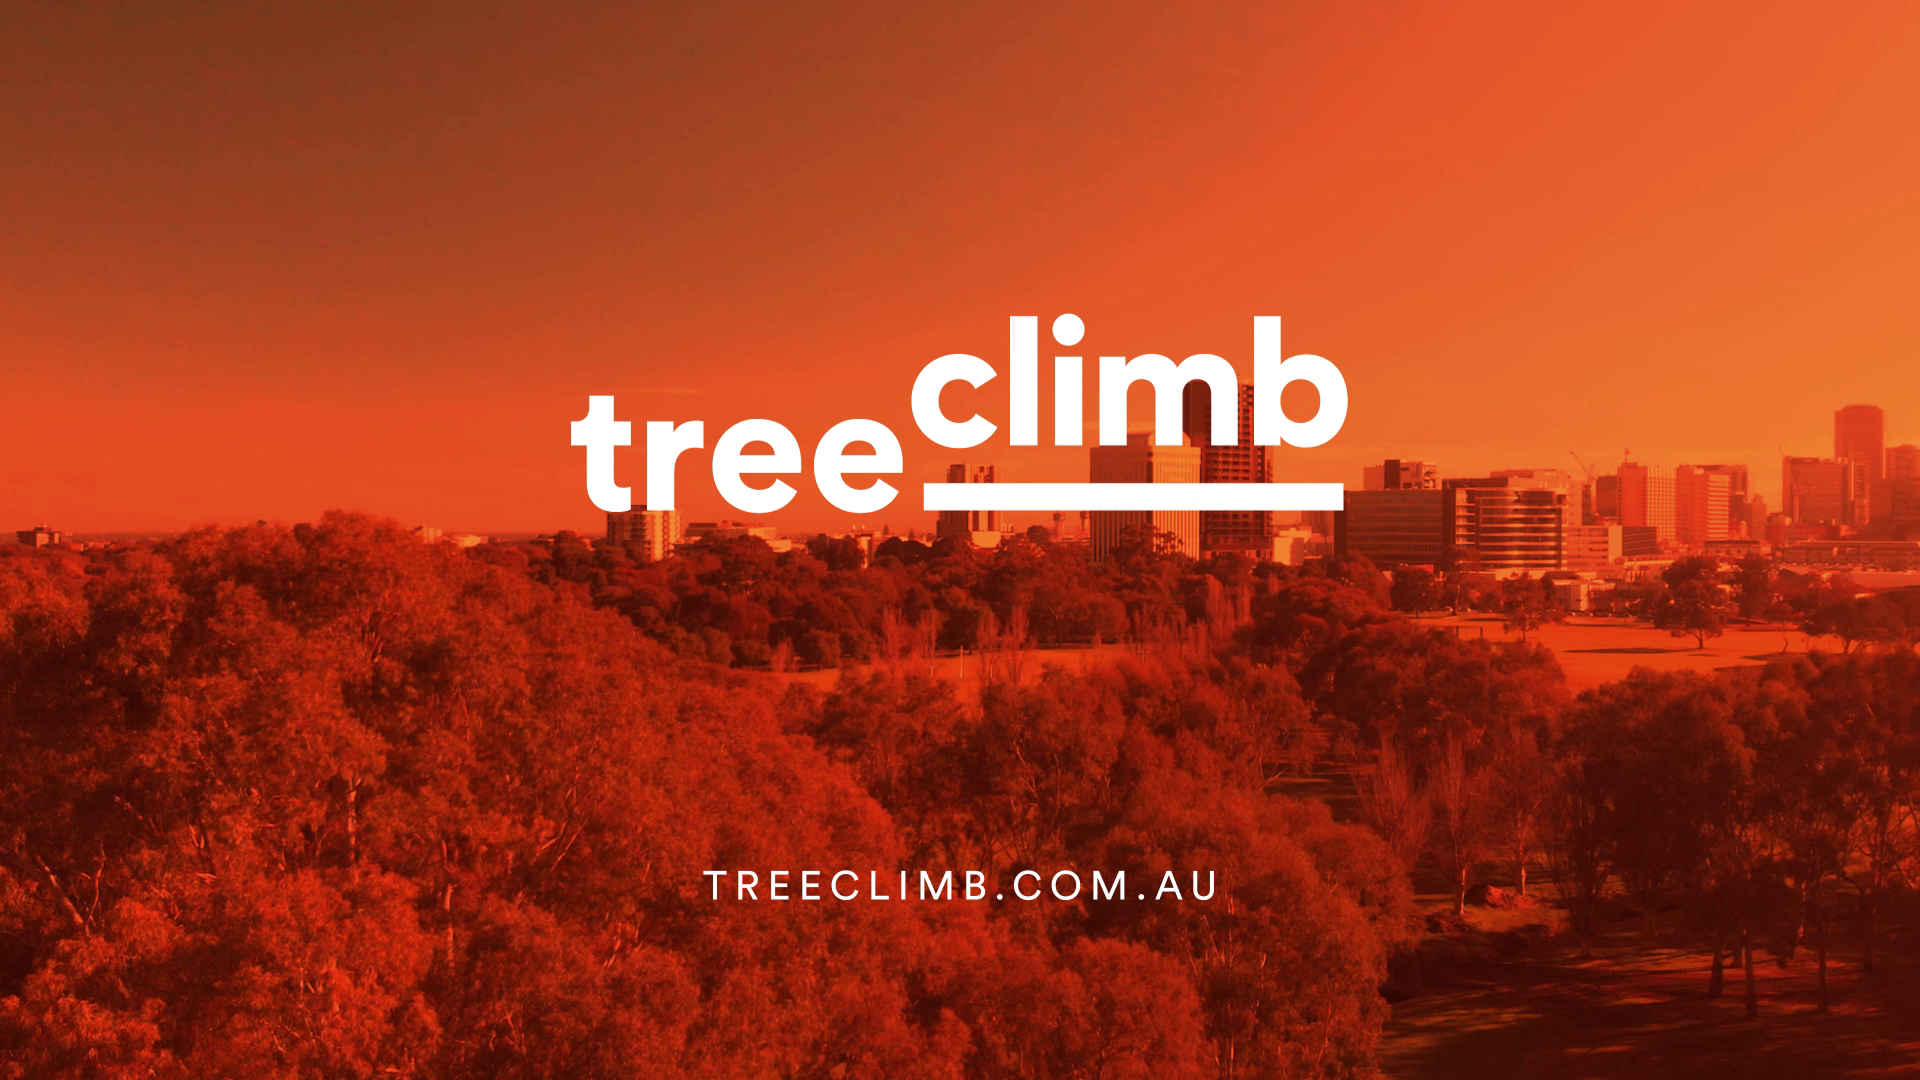 TreeClimb Launch Promo